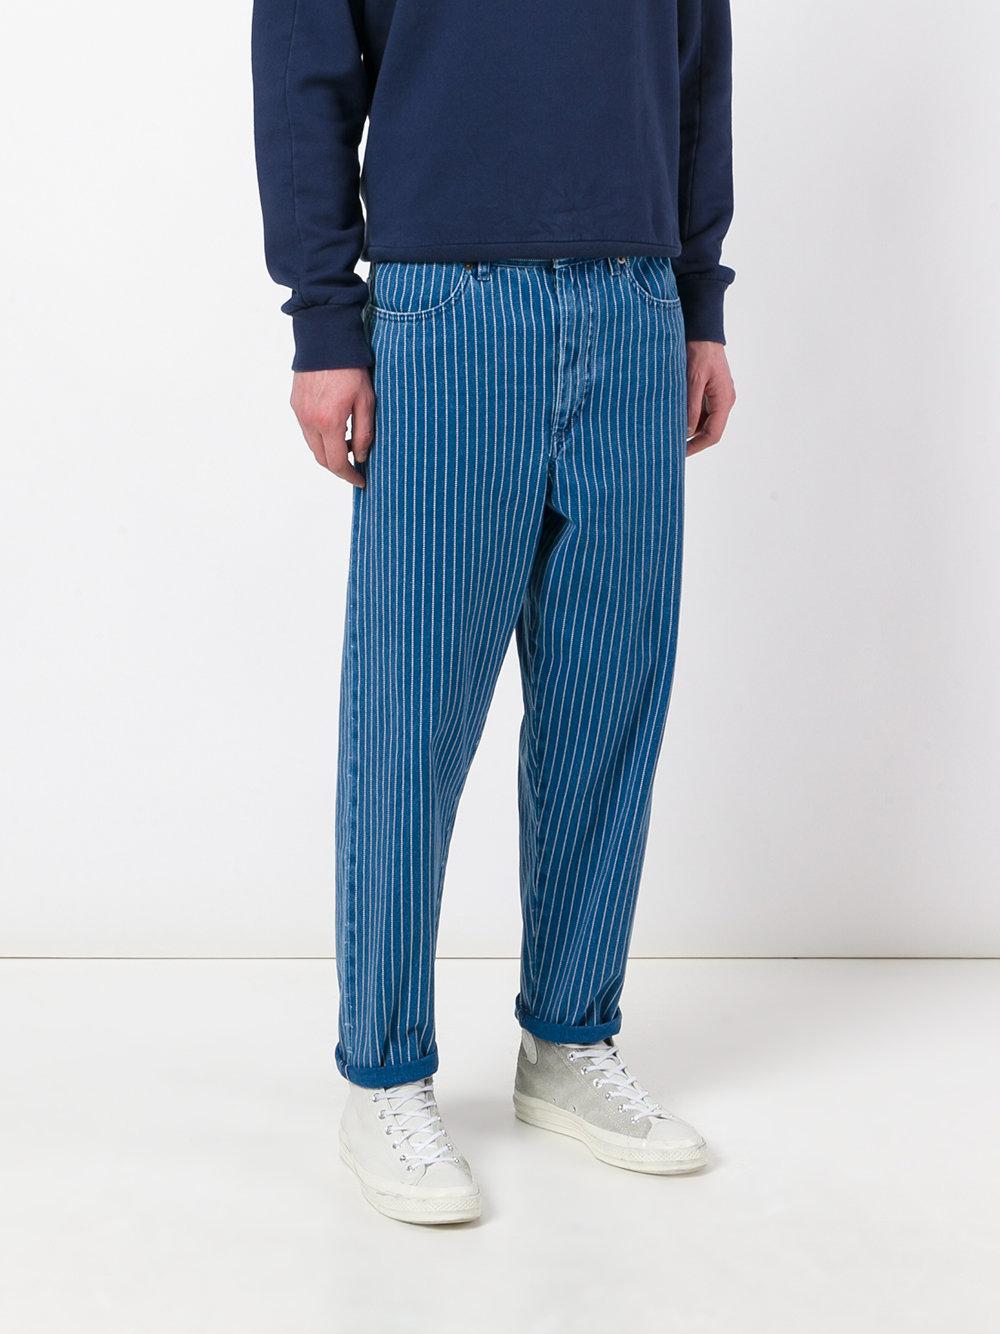 Natural Selection Denim Boxer Pinstripe Jeans in Blue for Men - Lyst